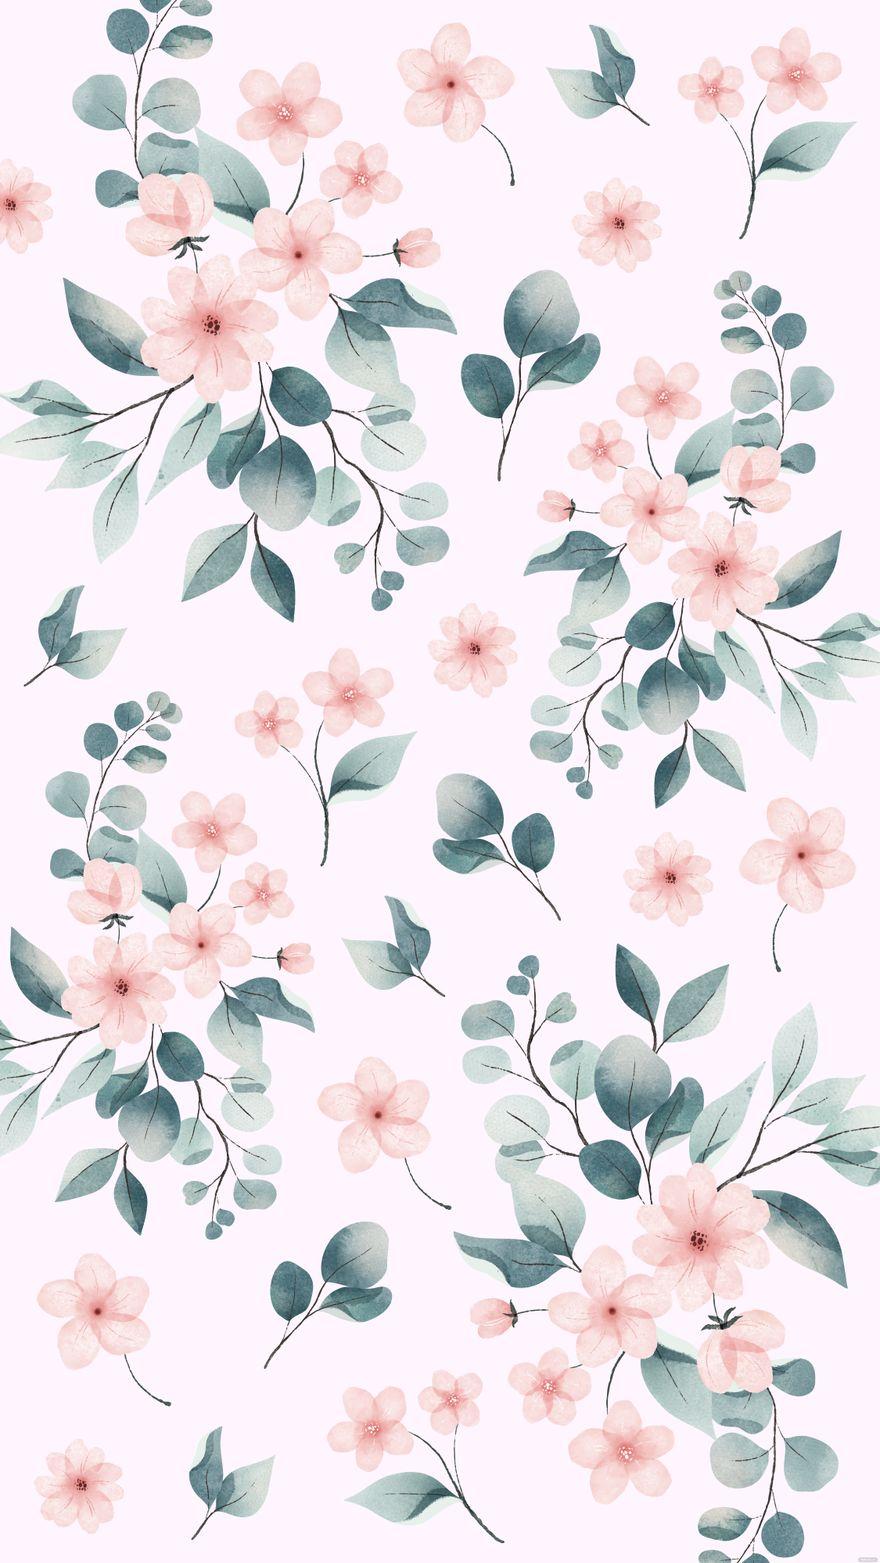 Watercolor iPhone Floral Background Eps Illustrator Jpg